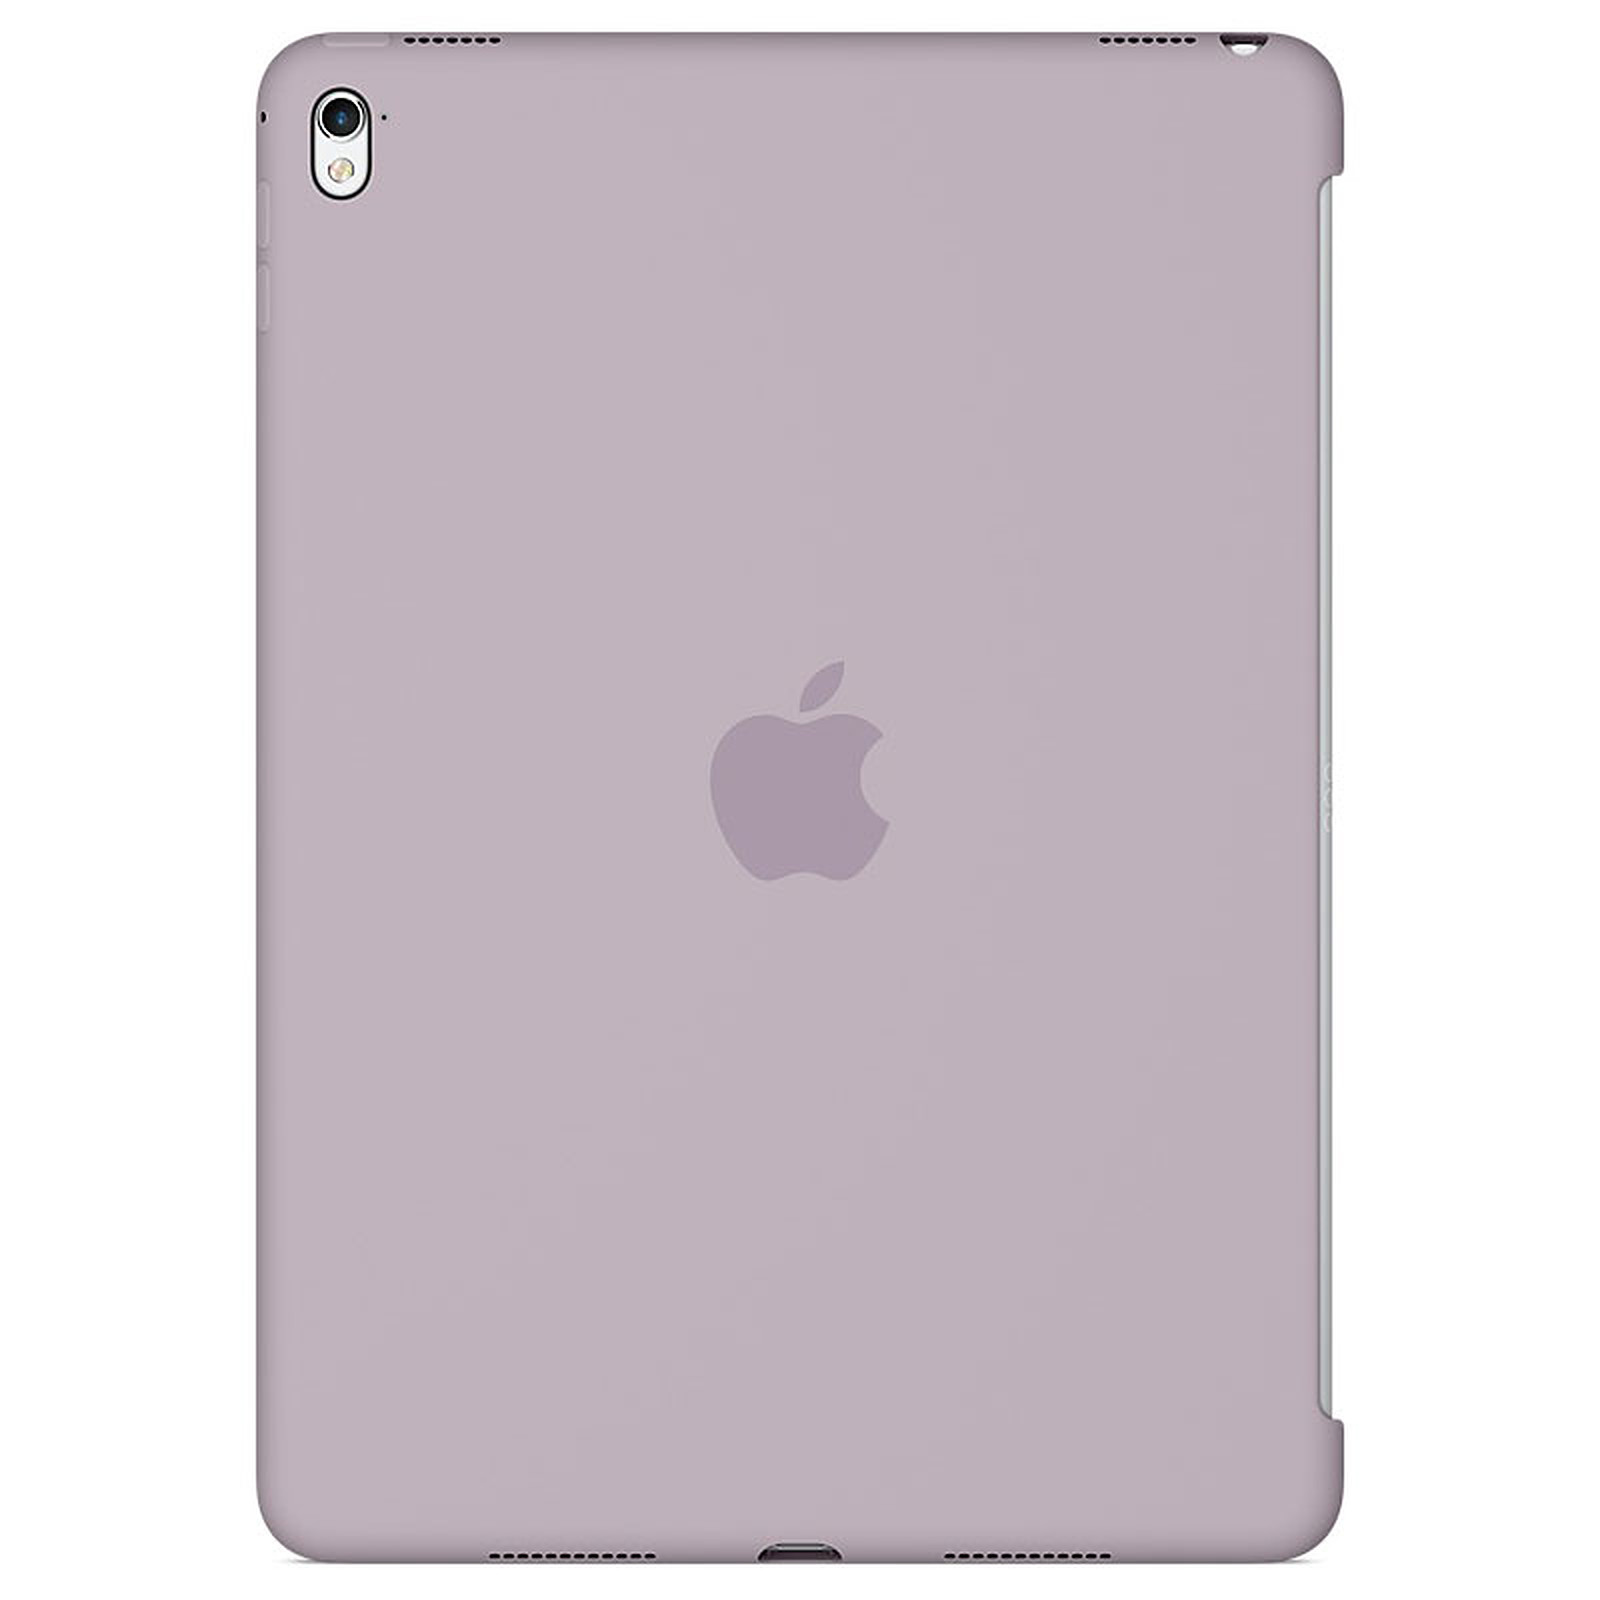 Apple iPad Pro 9.7" Silicone Case Lavande - Etui tablette Apple